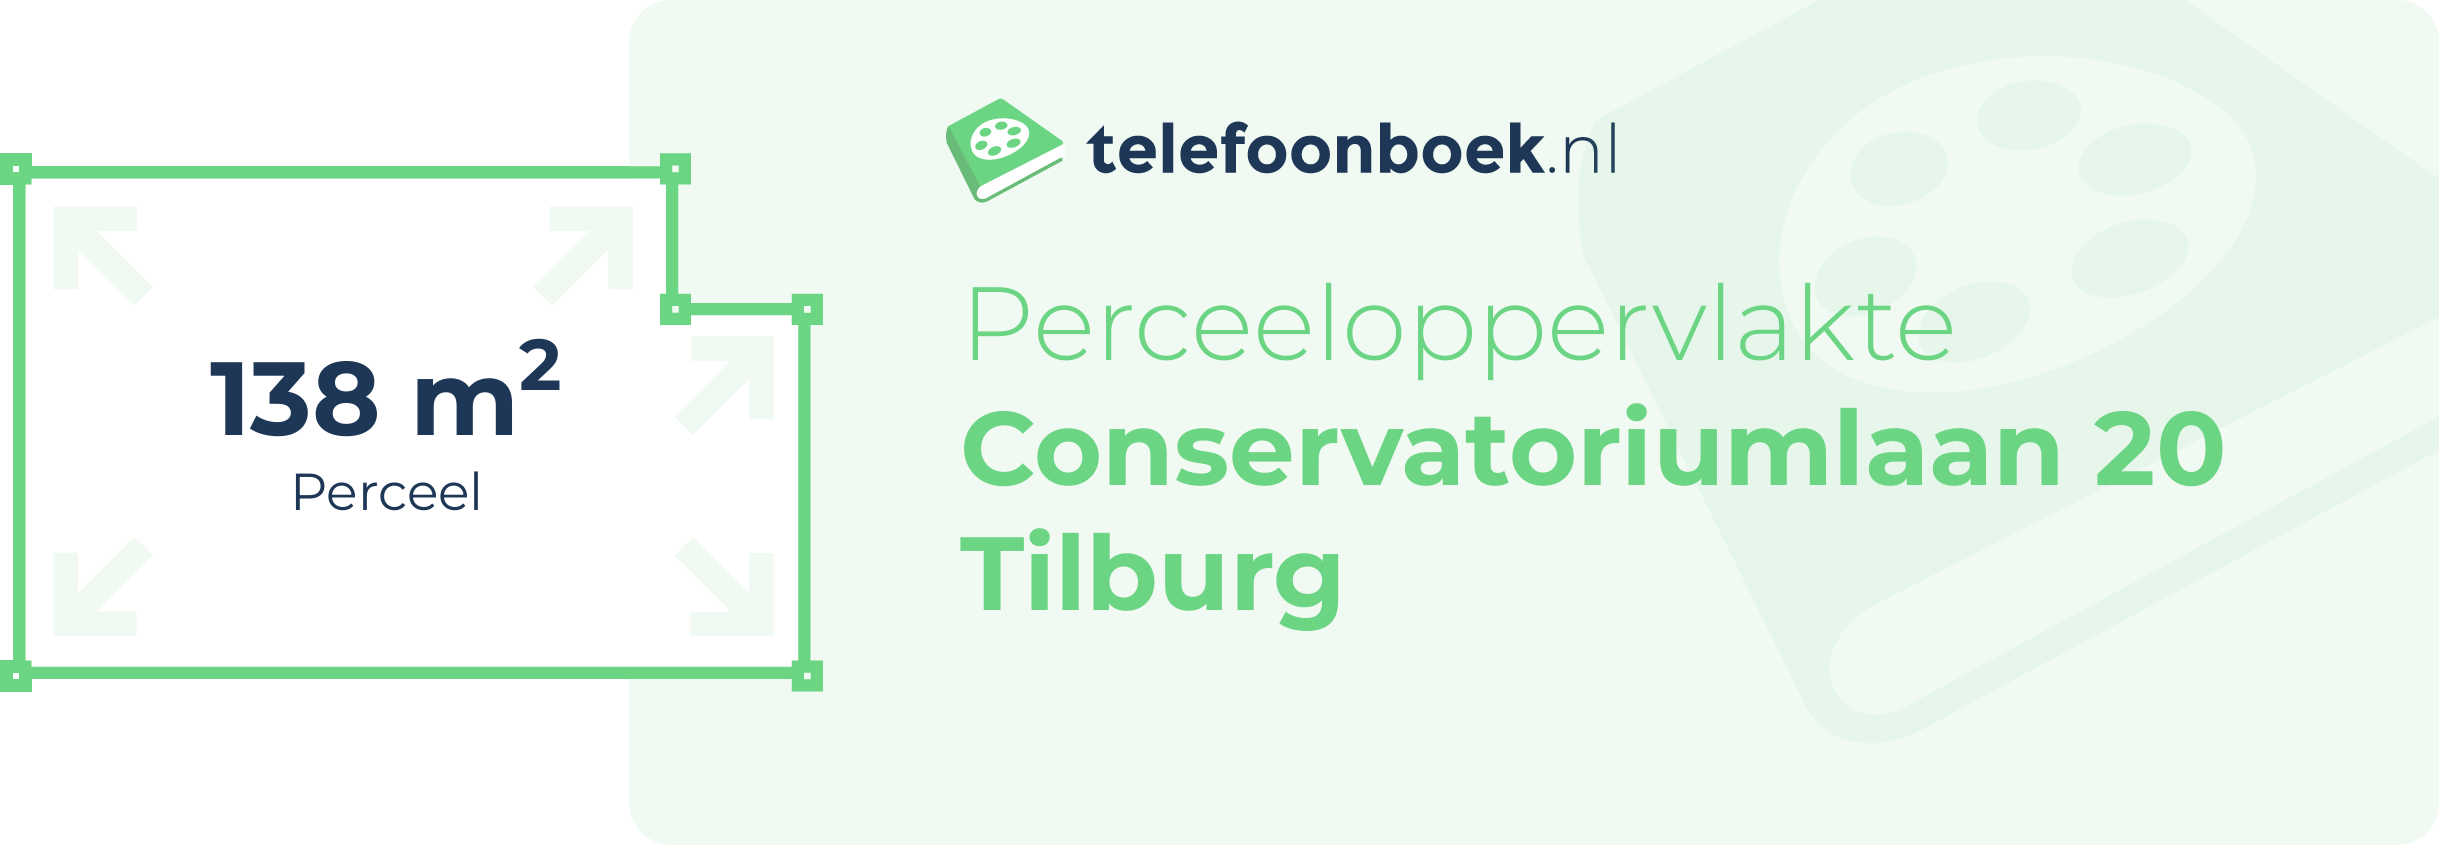 Perceeloppervlakte Conservatoriumlaan 20 Tilburg